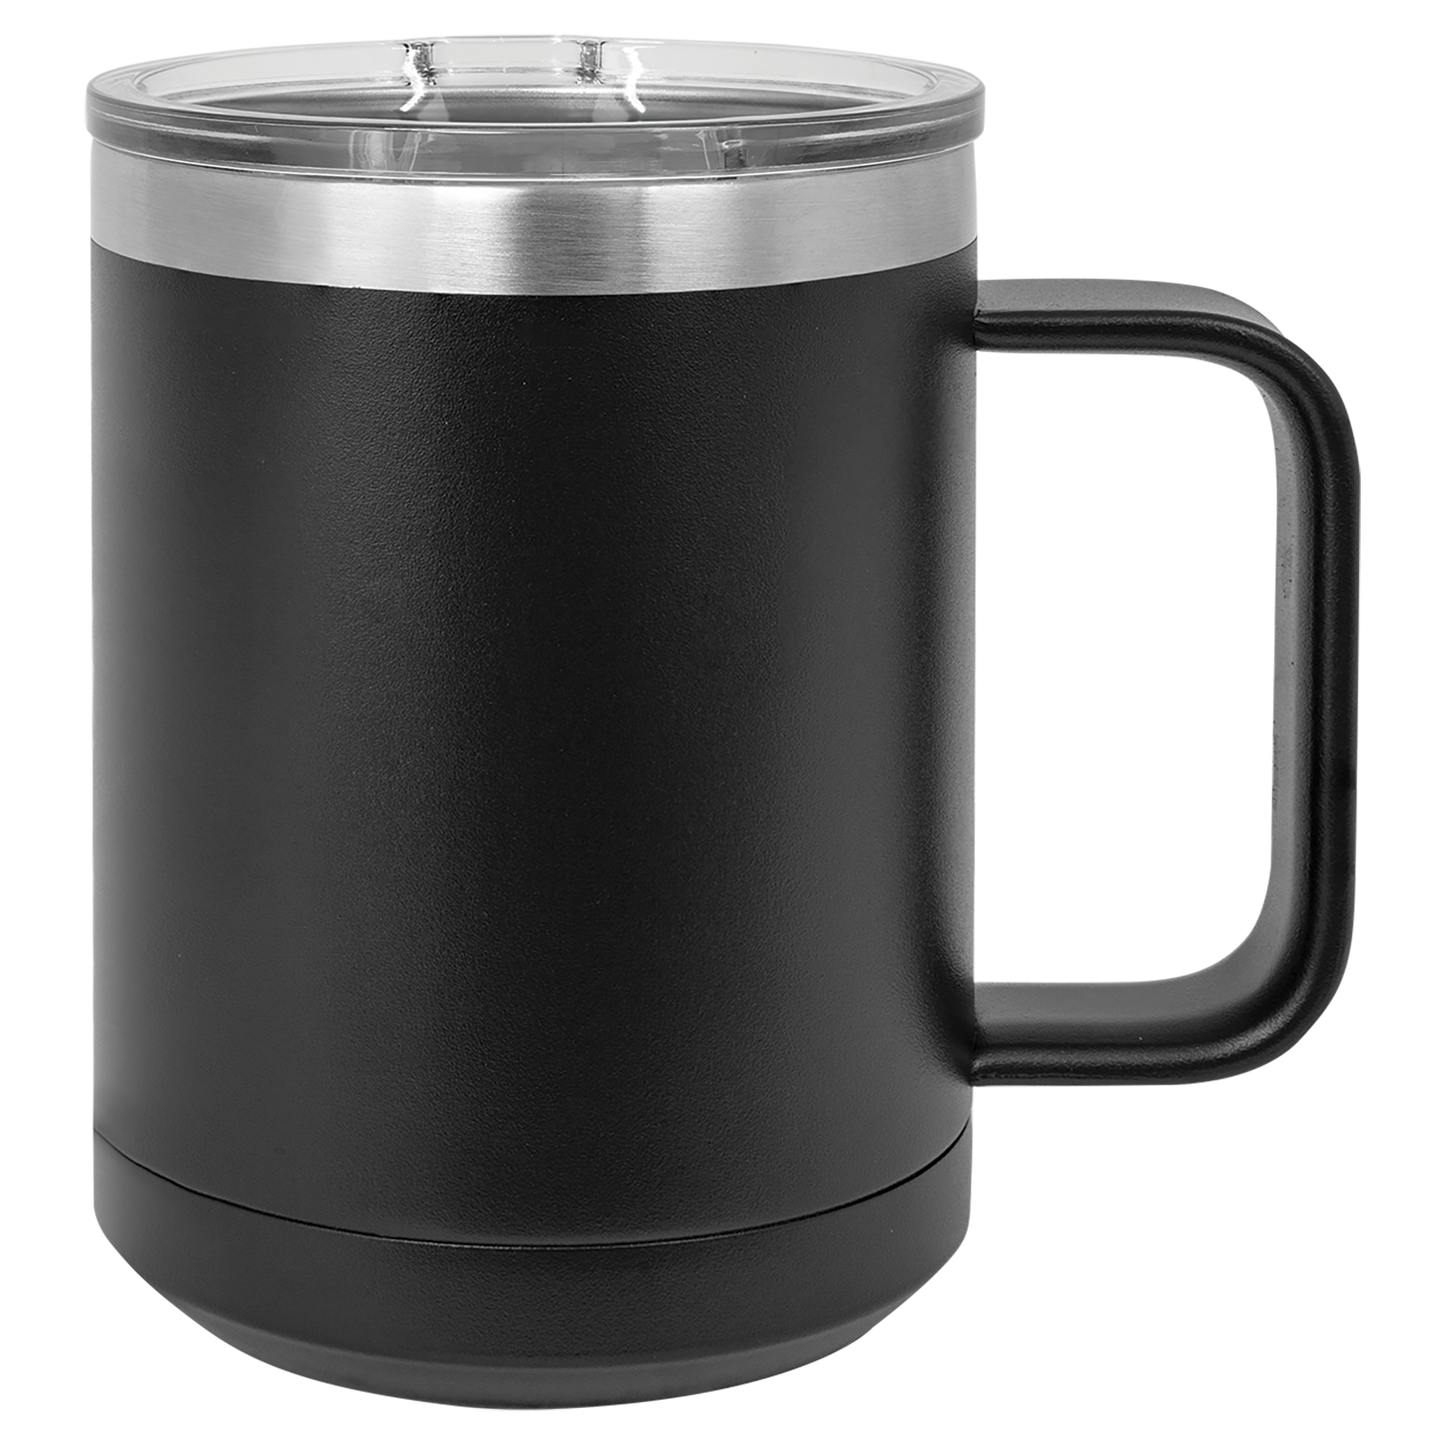 Yoelike 15oz Travel Mug with Handle and Lid, Stainless Steel